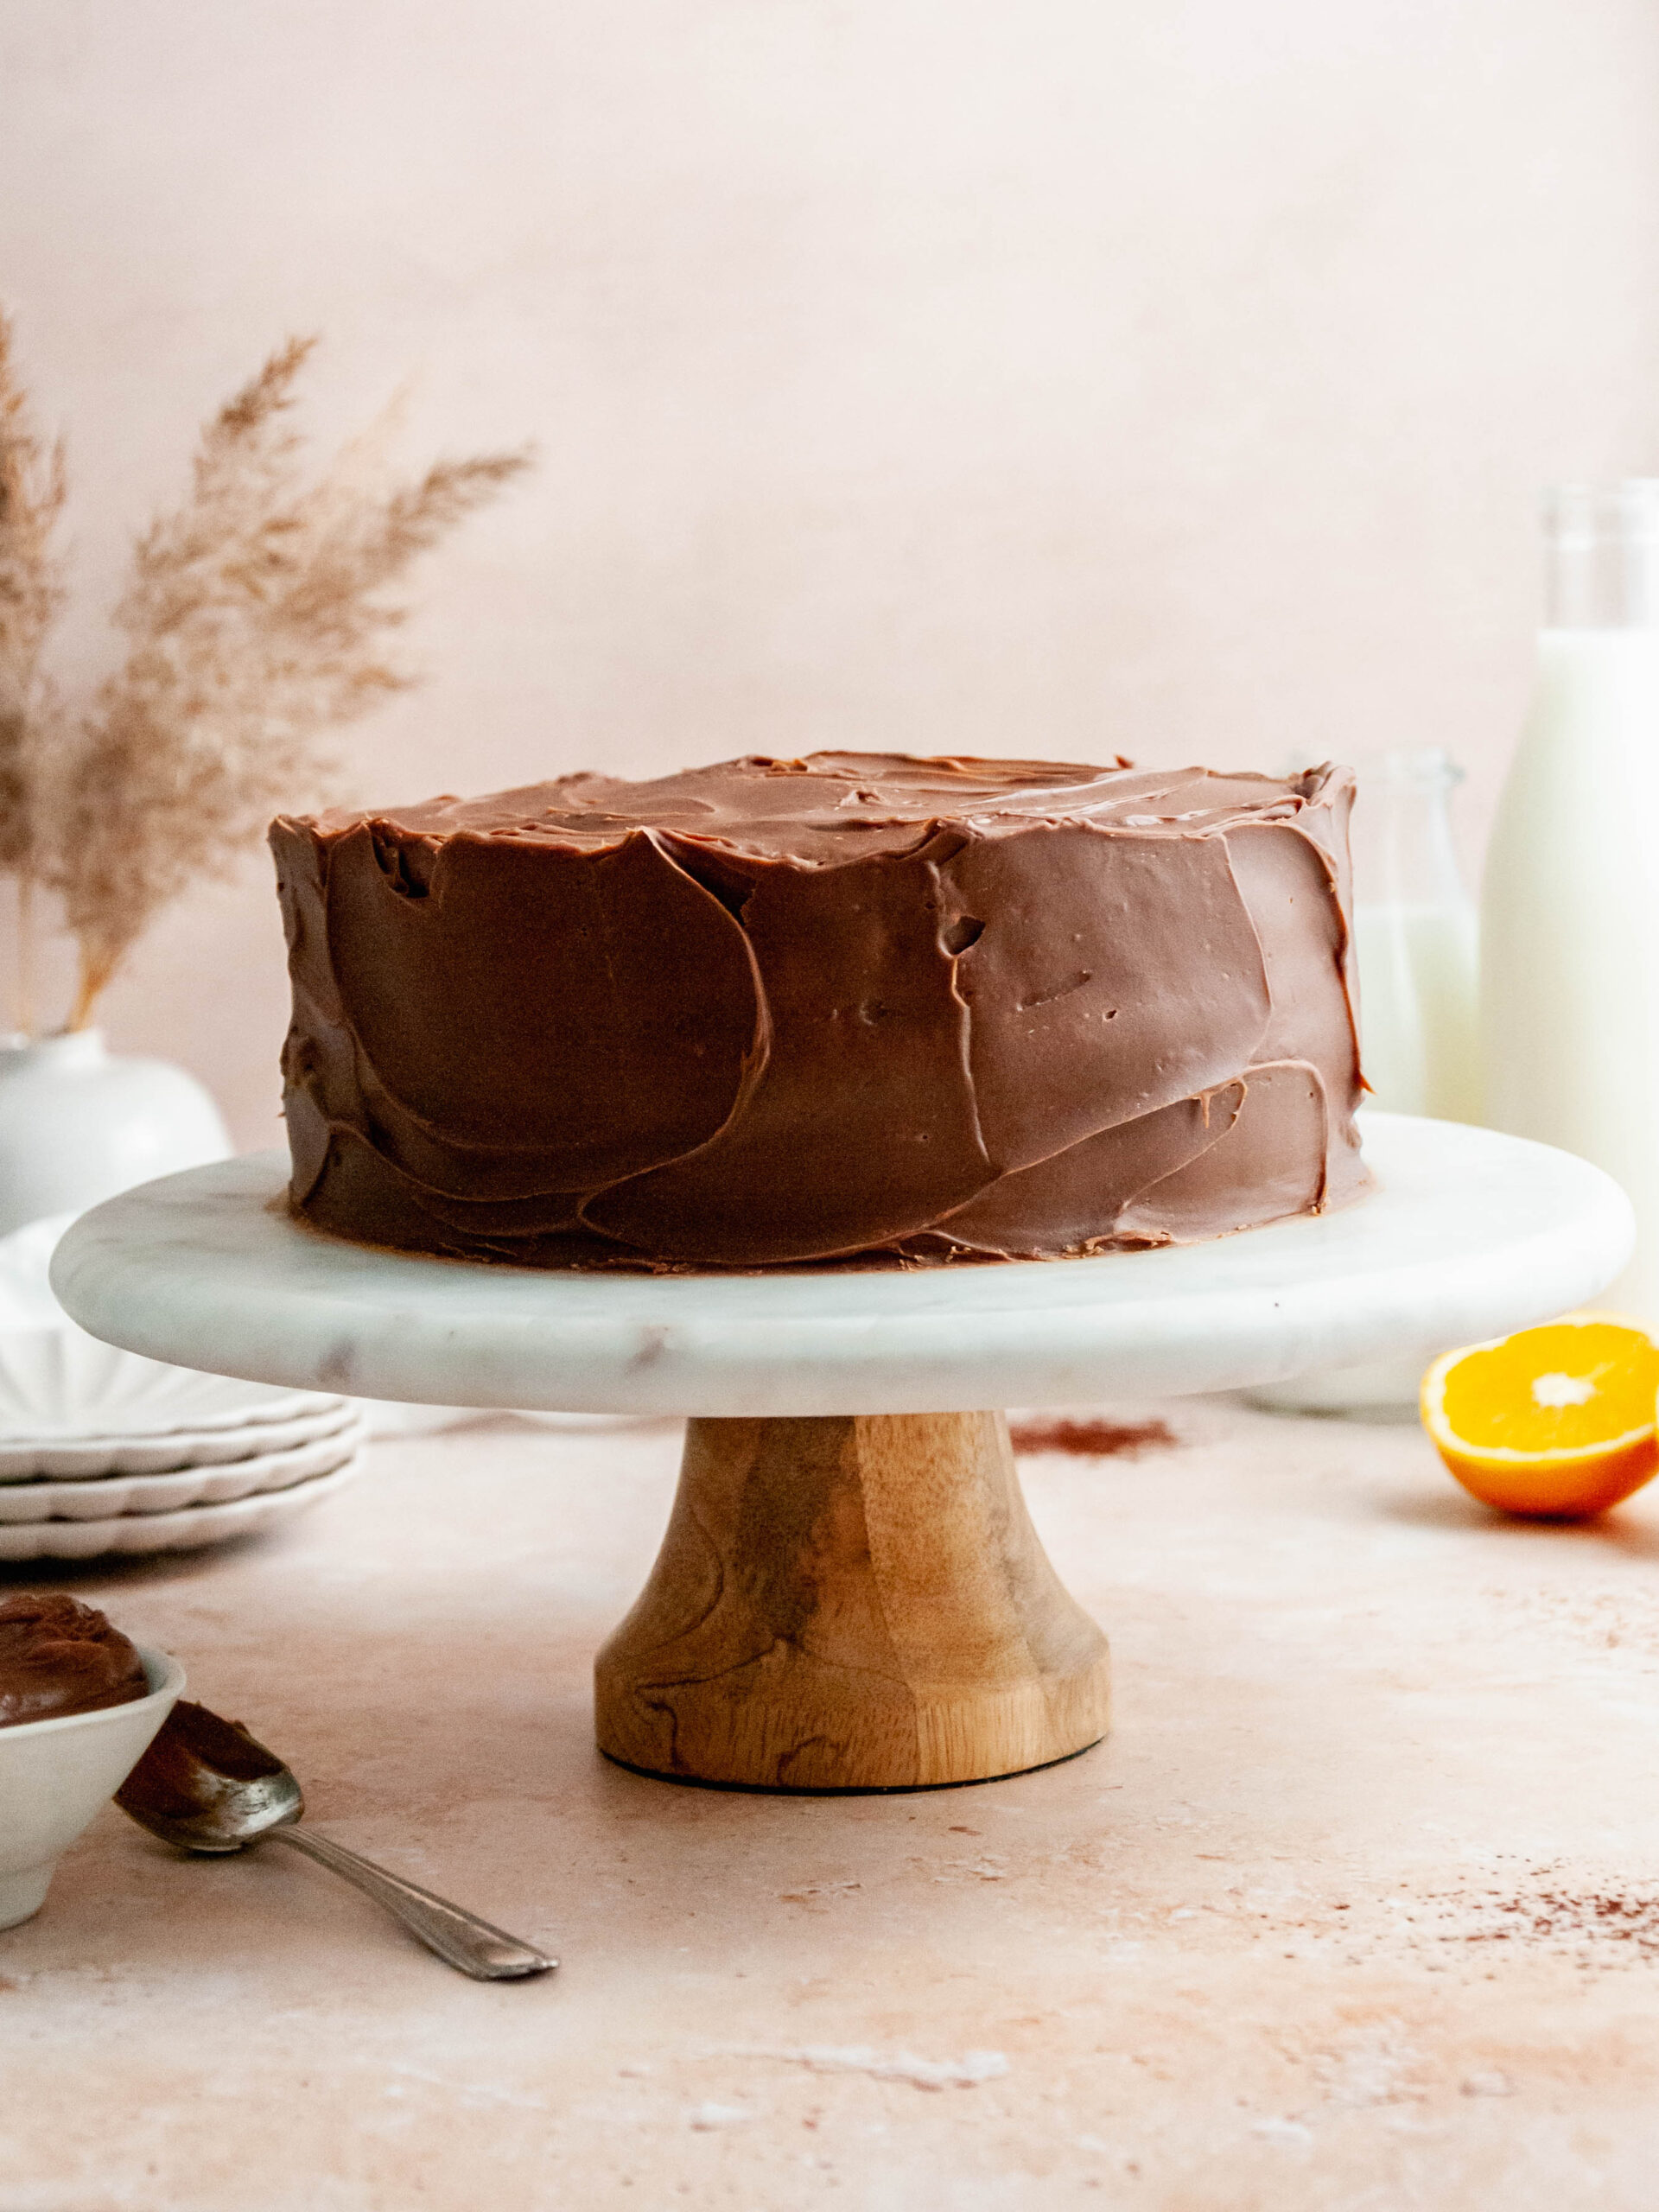 Chocolate orange cake on a cake stand.